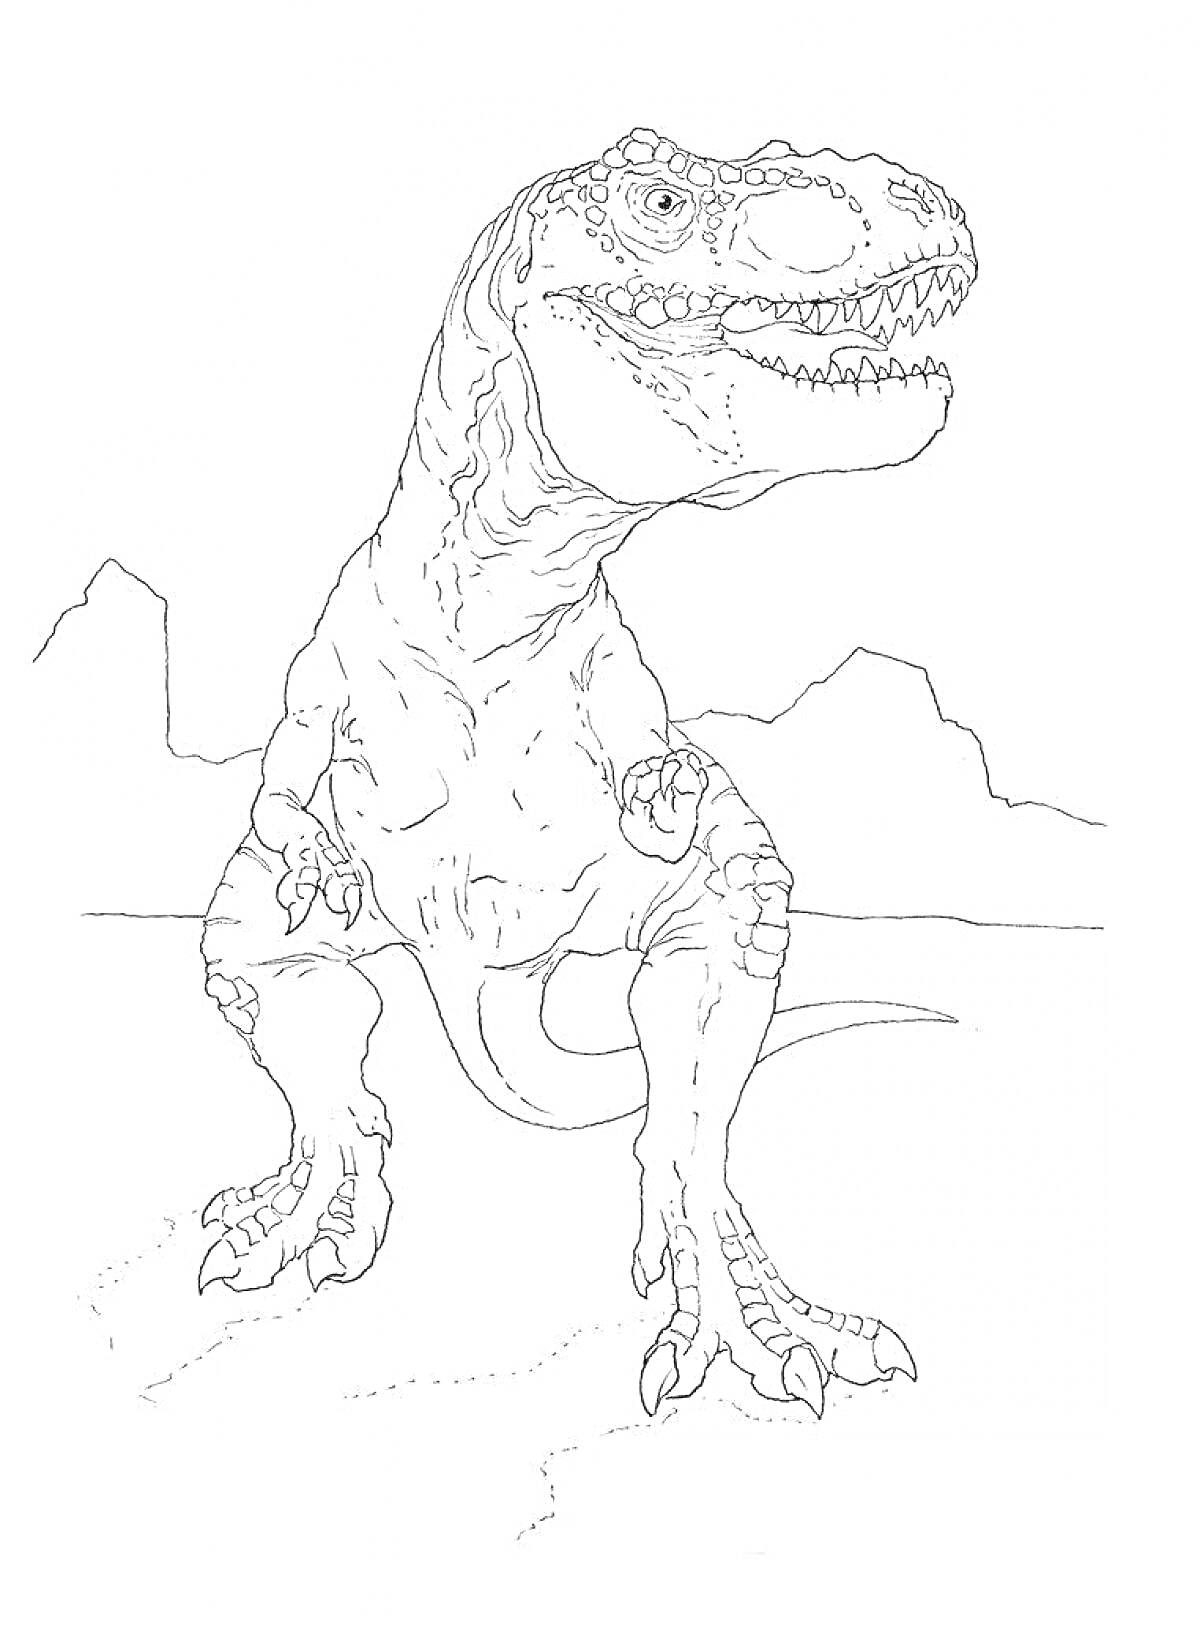 РаскраскаТираннозавр рекс на фоне гор